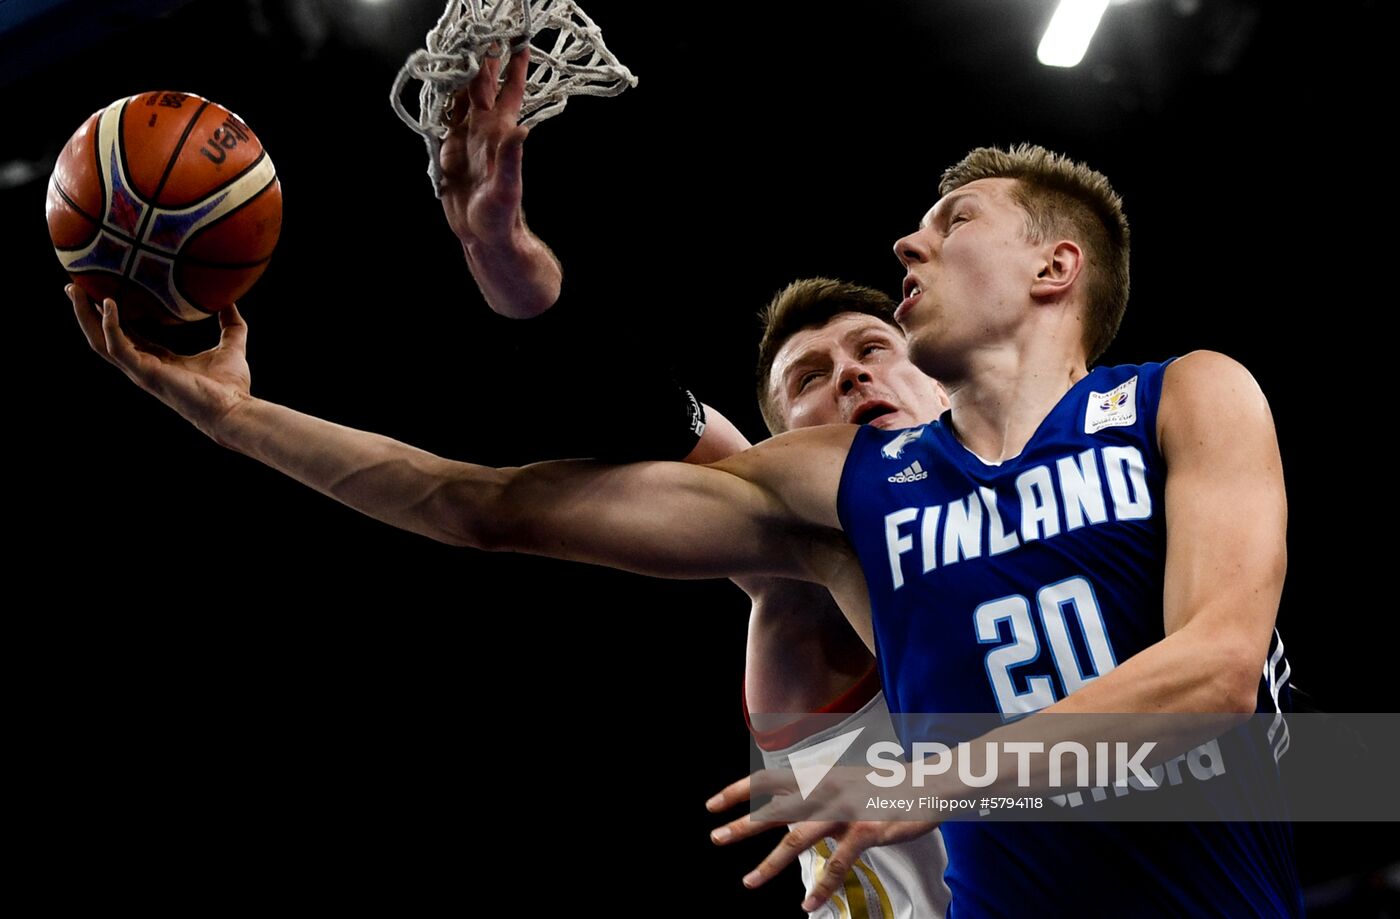 Russia Basketball Finland